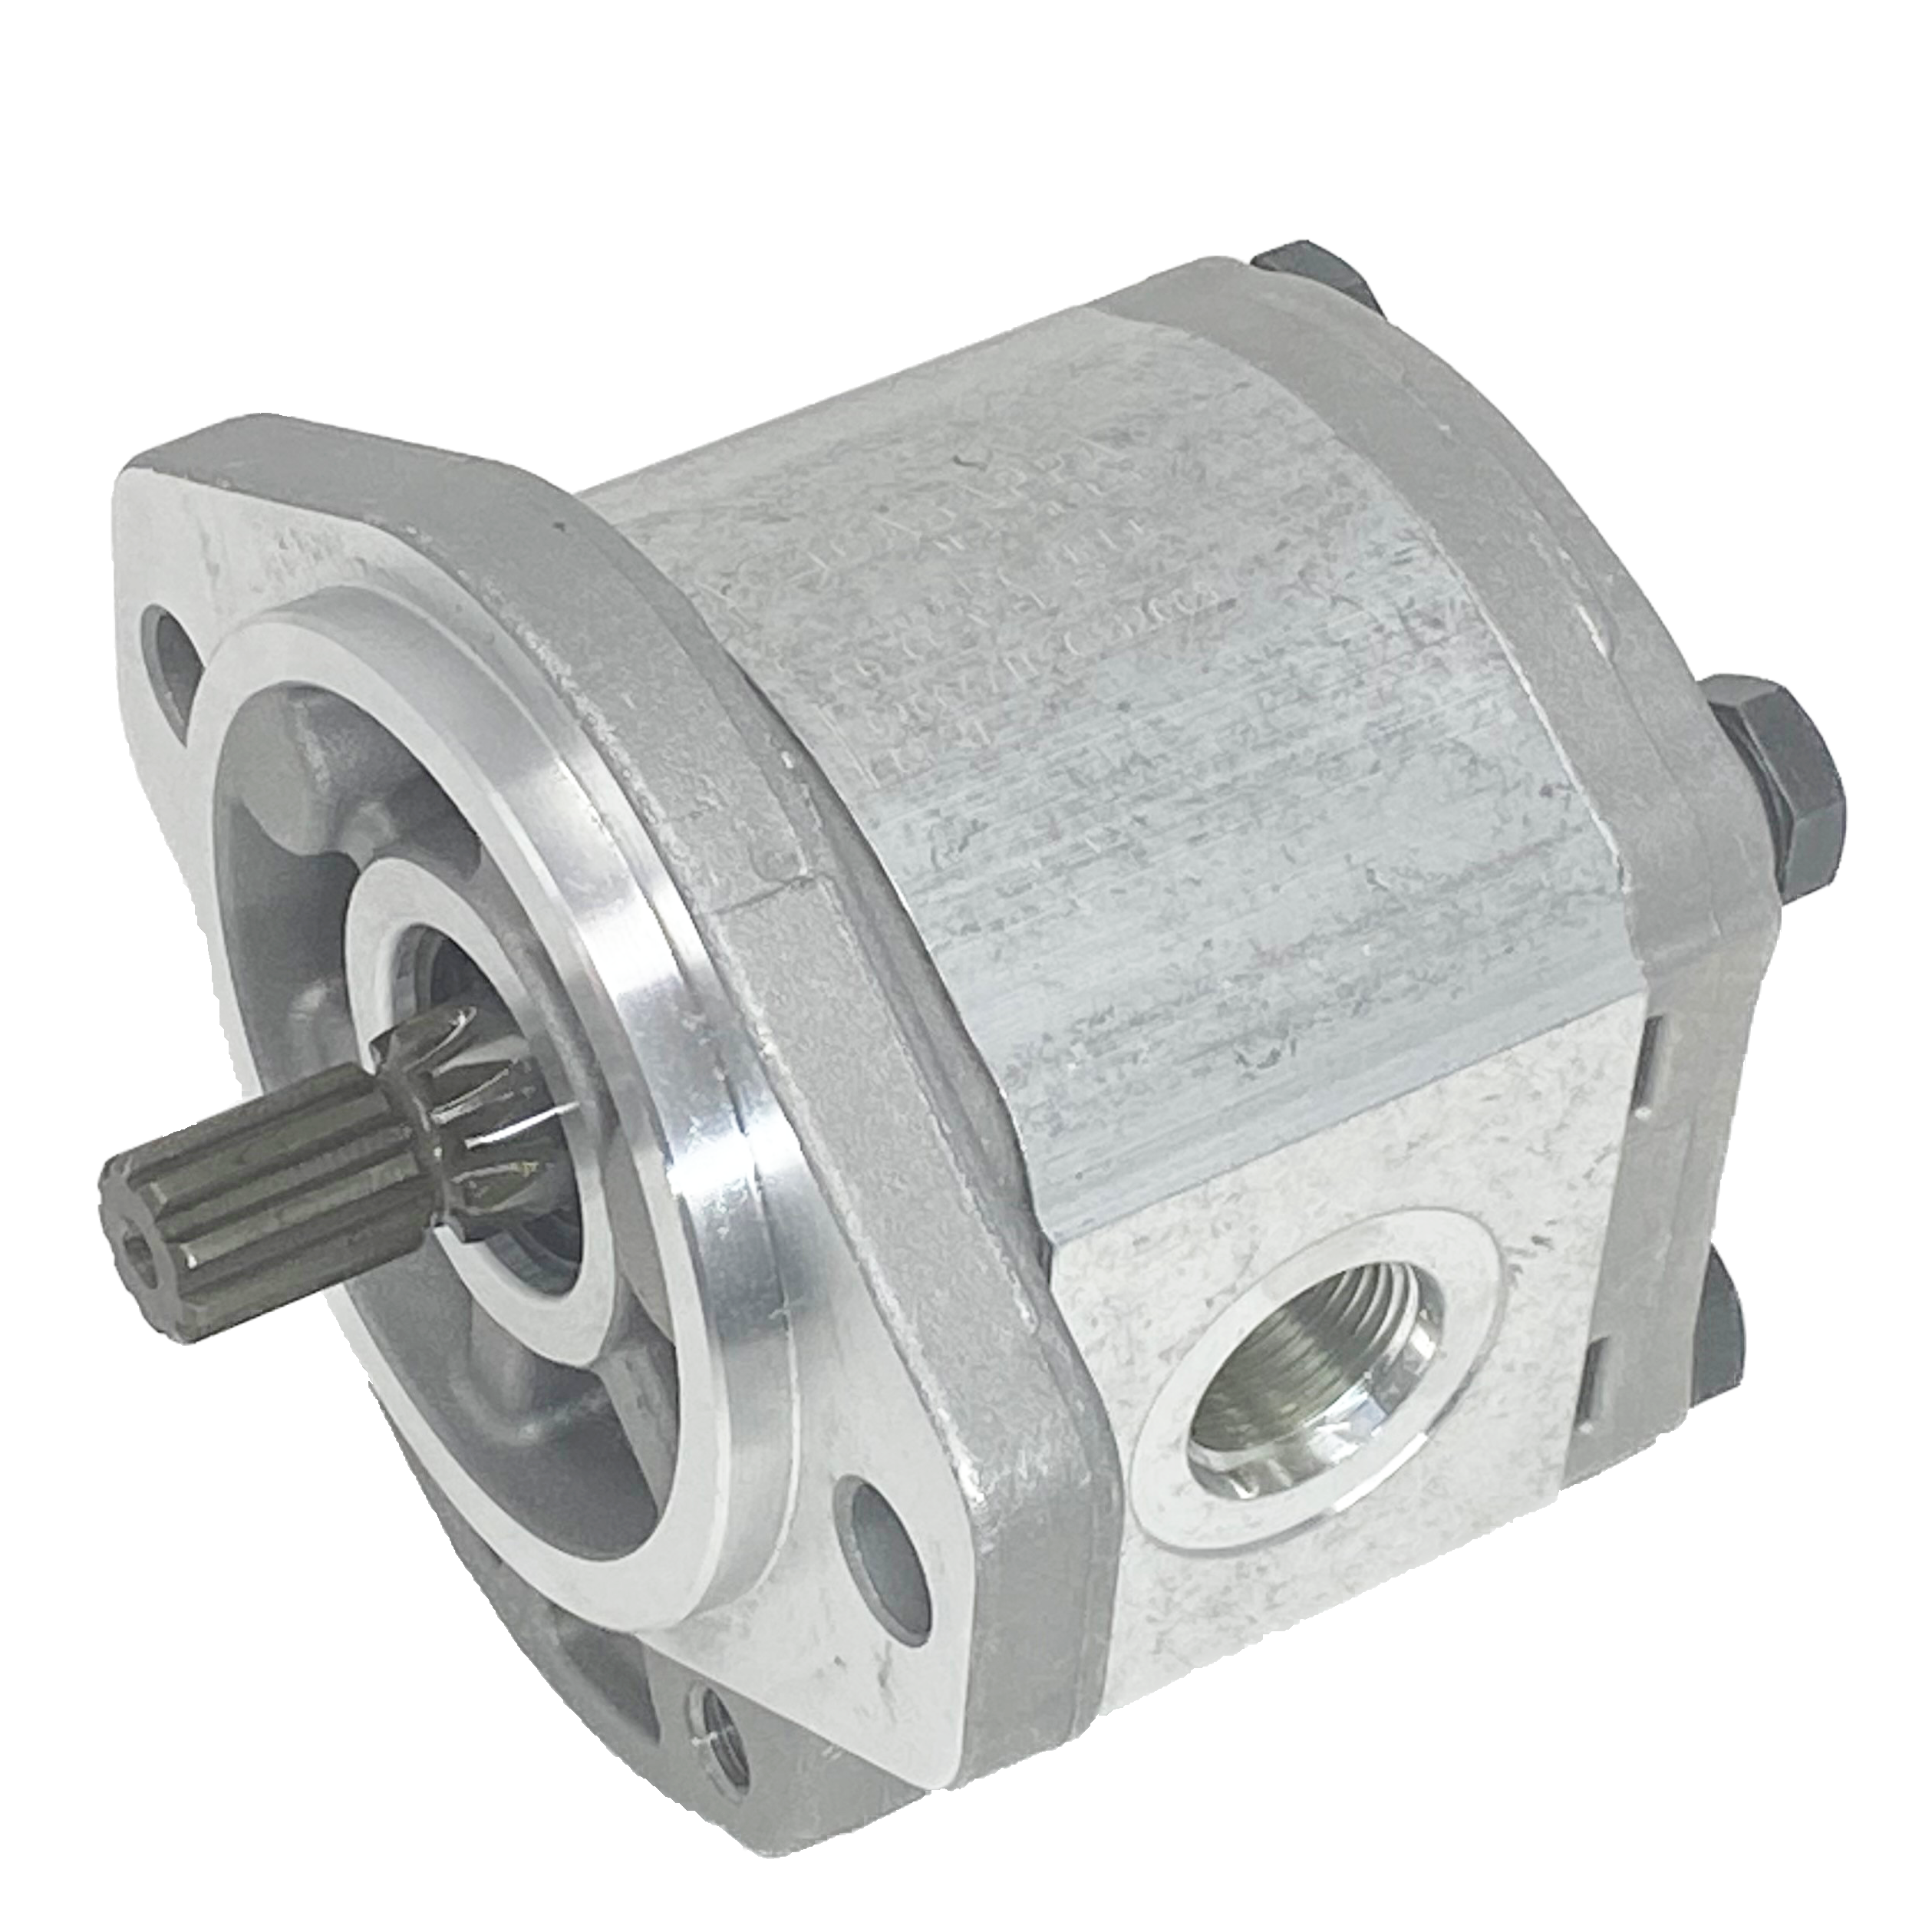 PLM20.14B0-07S1-LOC/OD-N-EL : Casappa Polaris Gear Motor, 14.53cc, 3625psi Rated, 3500RPM, Reversible Interior Drain, 11T 16/32dp Shaft, SAE A 2-Bolt Flange, 0.625 (5/8") #10 SAE Inlet, 0.75 (3/4") #12 SAE Outlet, Aluminum Body & Flange